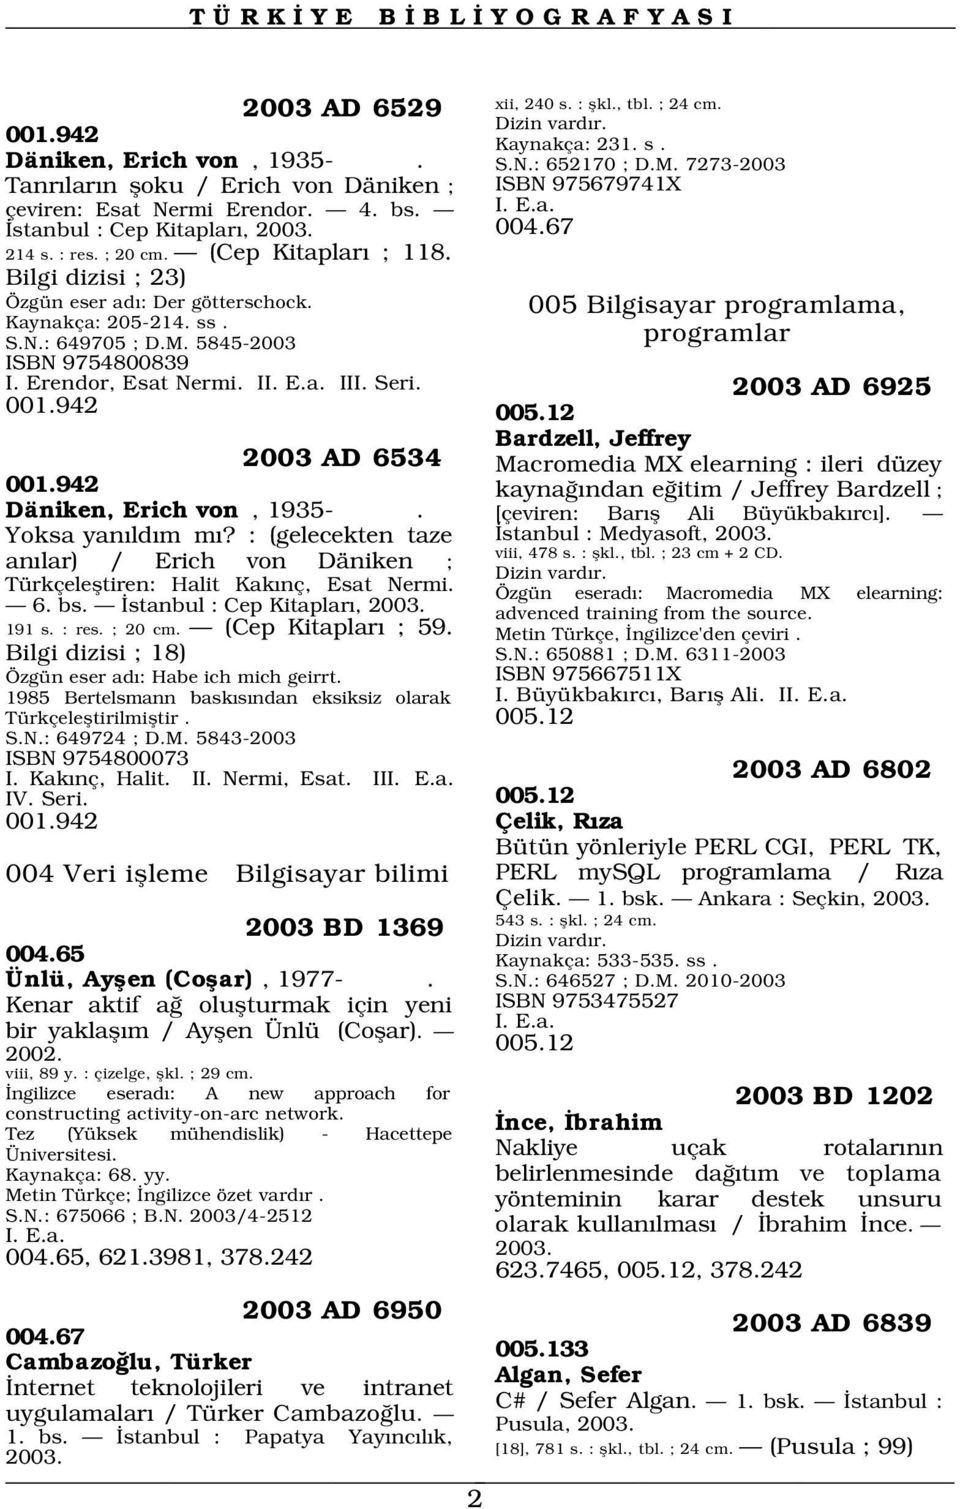 Bilgi dizisi ; 23) Özgün eser ad : Der götterschock. Kaynakça: 205-214. ss. S.N.: 649705 ; D.M. 5845-2003 ISBN 9754800839 ISBN 975679741X 004.67 005 Bilgisayar programlama, programlar I.